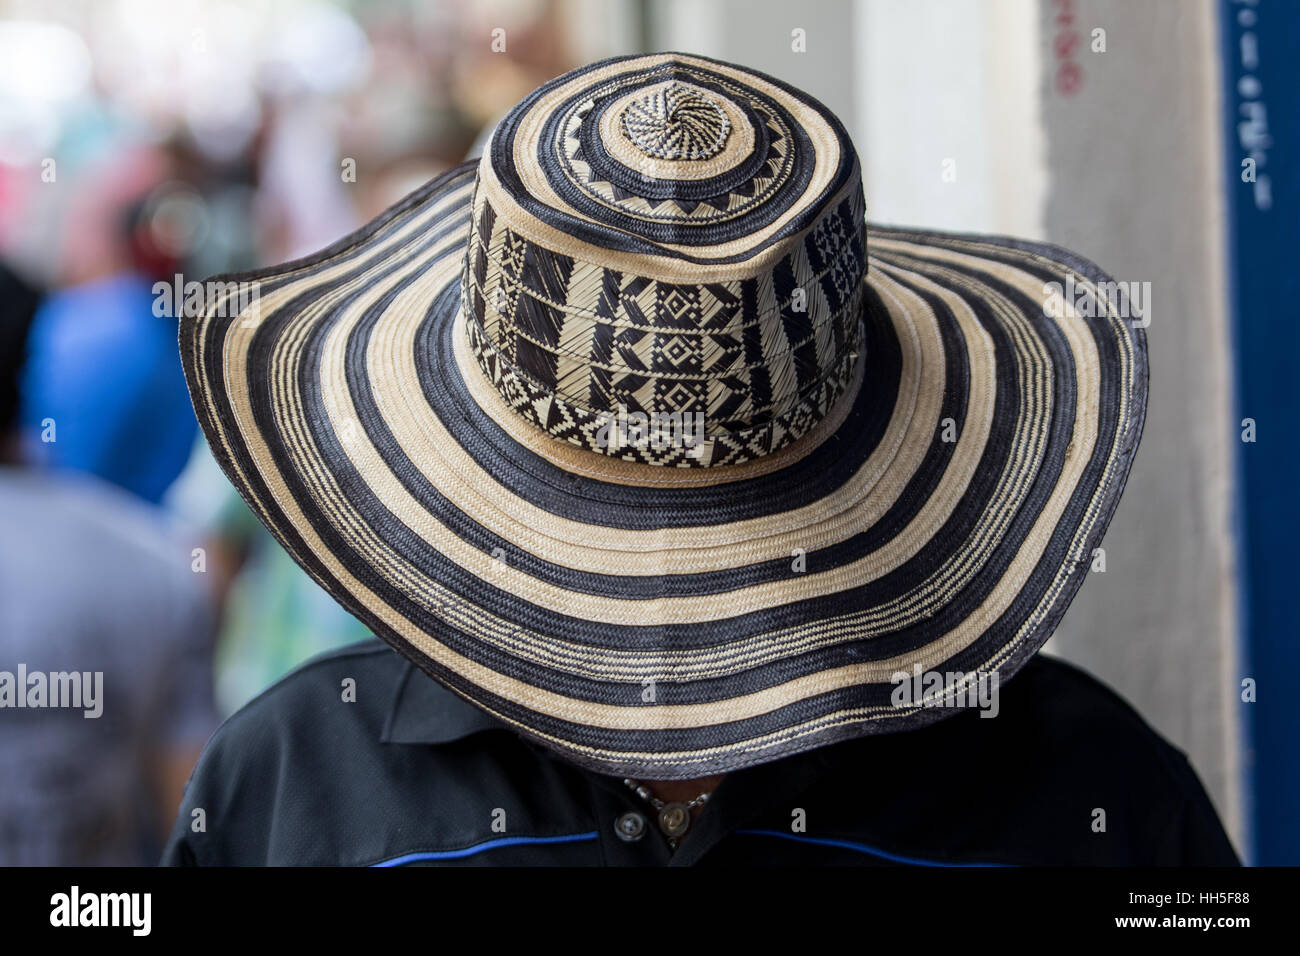 https://c8.alamy.com/compes/hh5f88/hombre-que-llevaba-un-sombrero-de-paja-tradicional-colombiana-denominada-sombrero-vueltiao-hh5f88.jpg